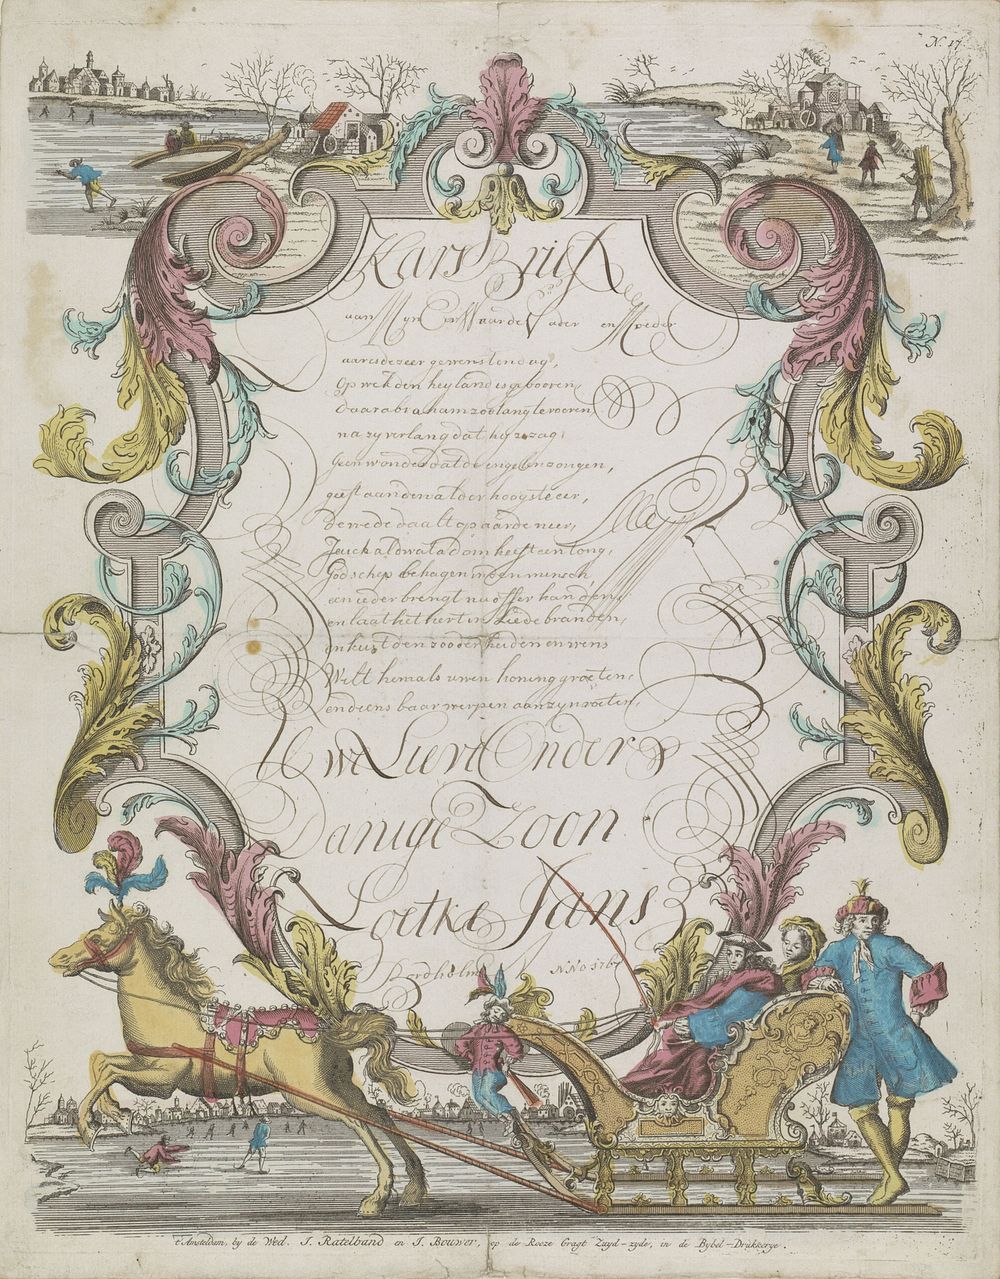 Wensbrief met arrenslede (1767) by weduwe Jeronimus Ratelband en Johannes Bouwer and anonymous